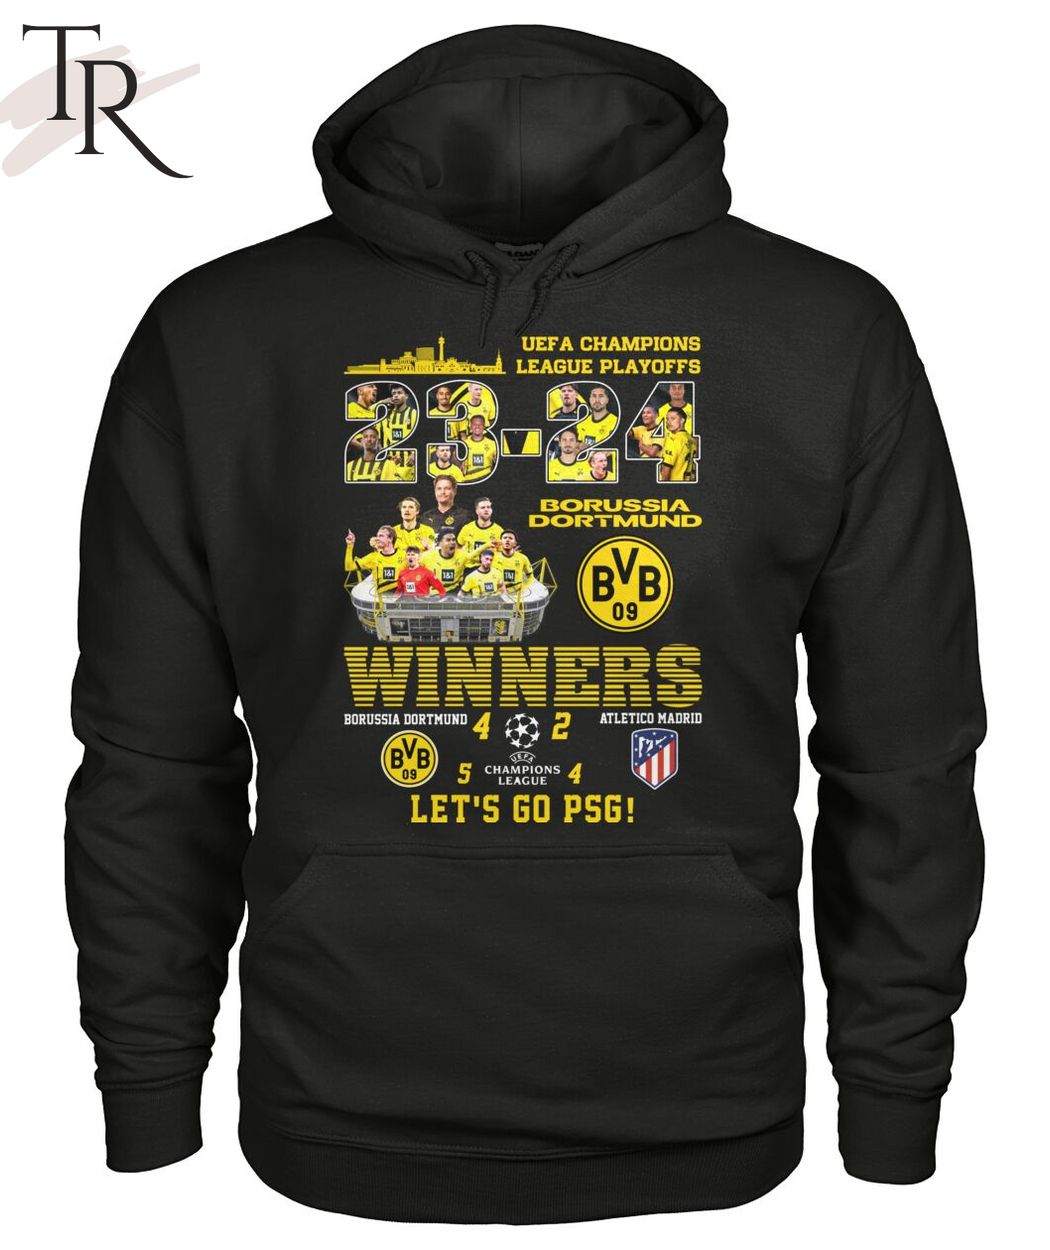 UEFA Champions League Playoffs Winners Borussia Dortmund 4 - 2 Atletico Madrid Let's Go PSG T-Shirt